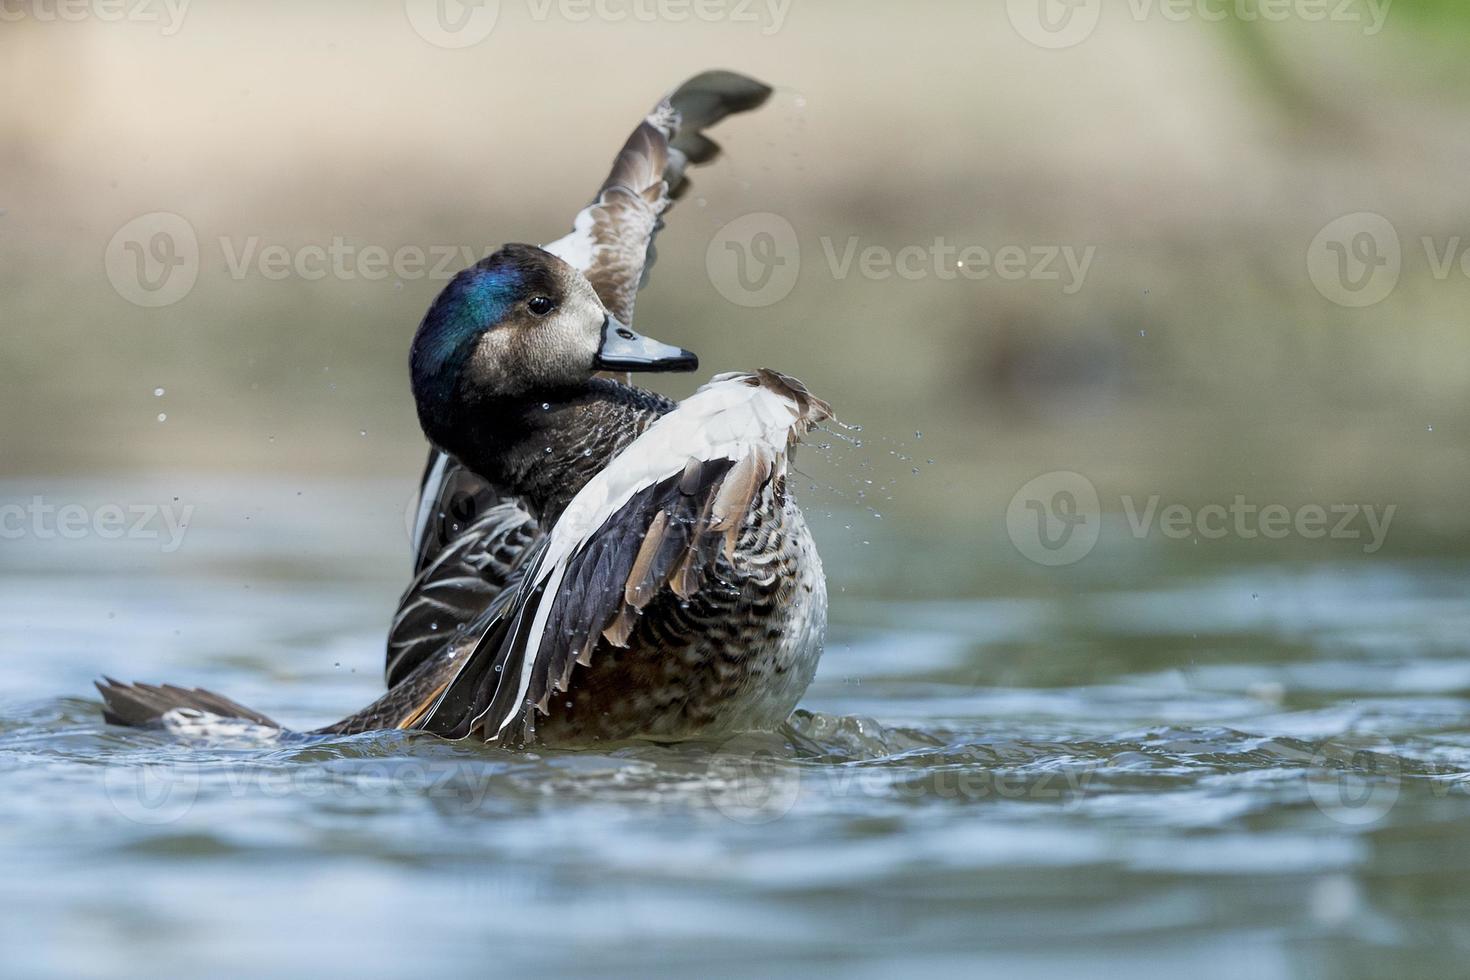 Wiild Duck while splashing on water photo